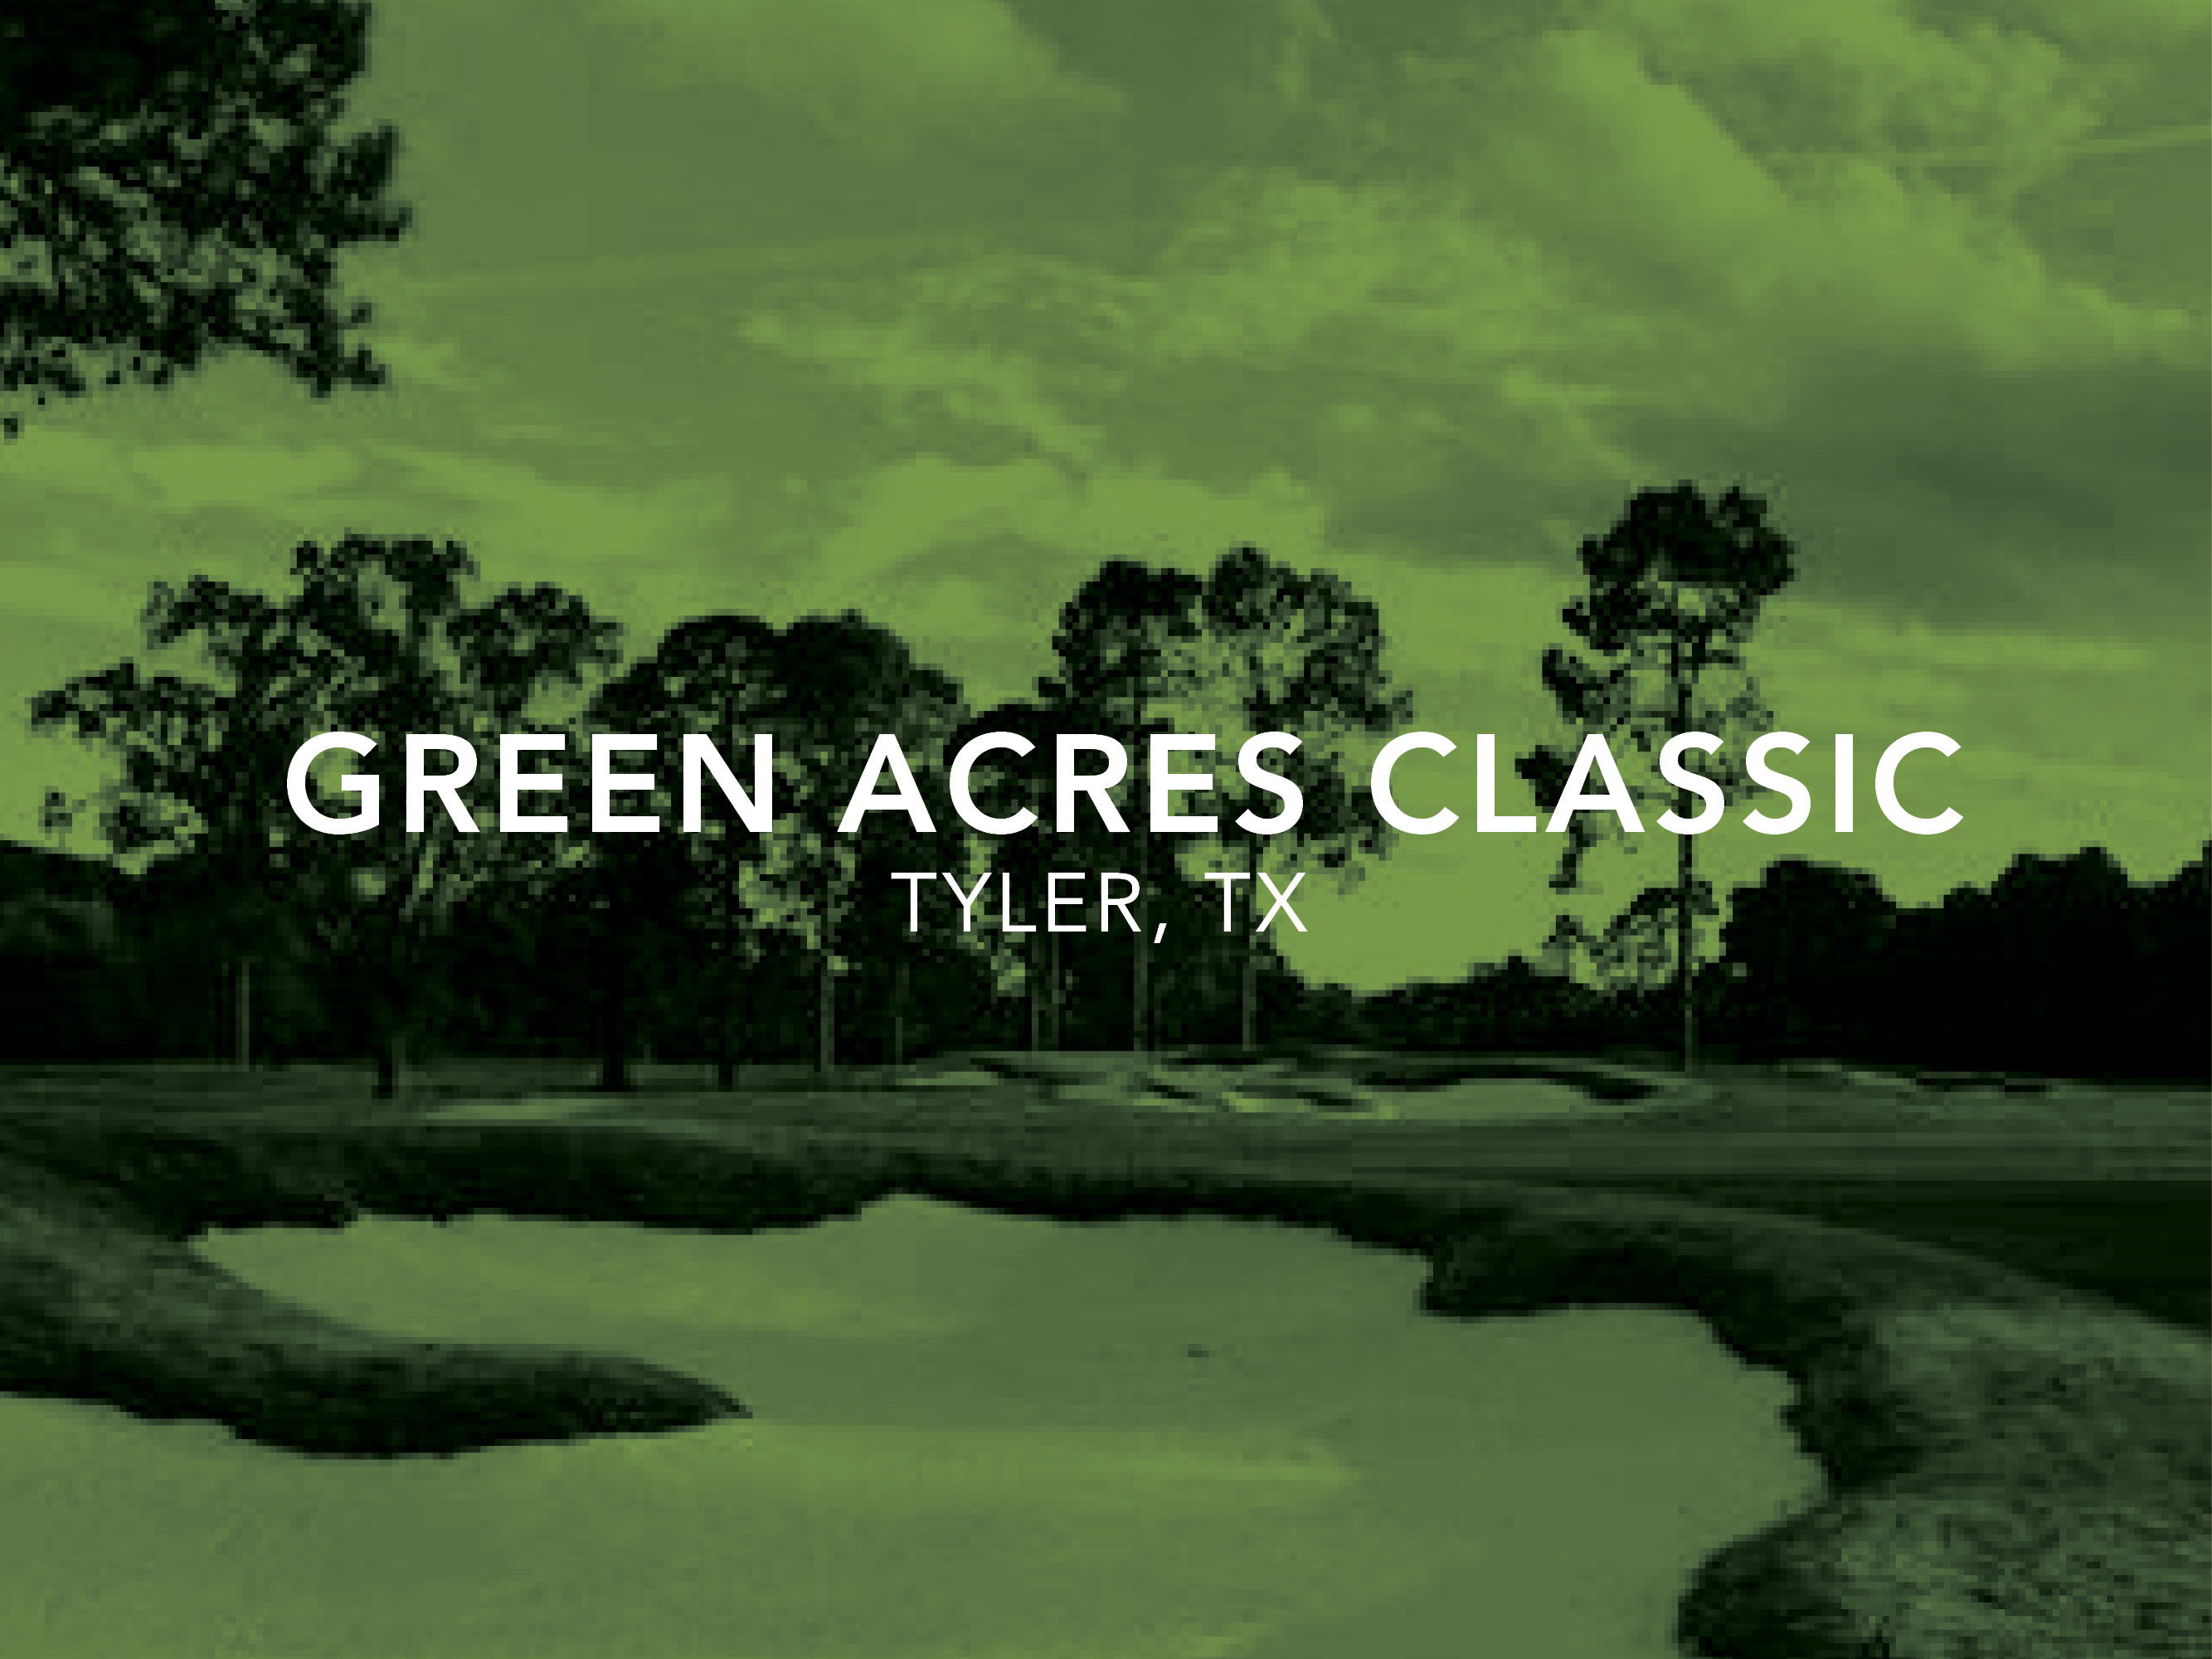 Green Acres Classic Golf Tournament